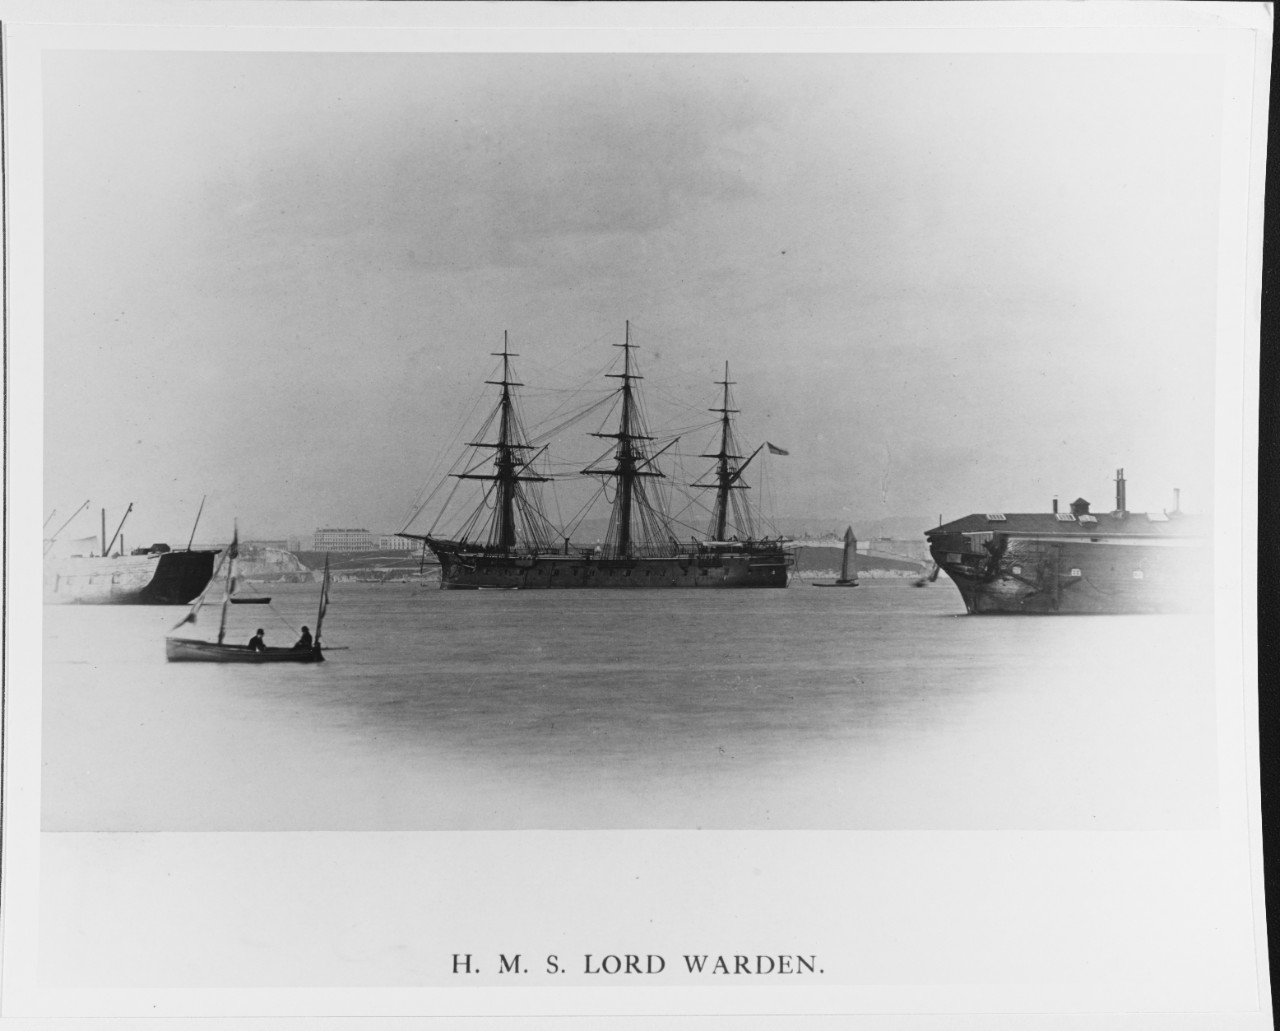 HMS LORD WARDEN (BRITISH BATTLESHIP, 1865)